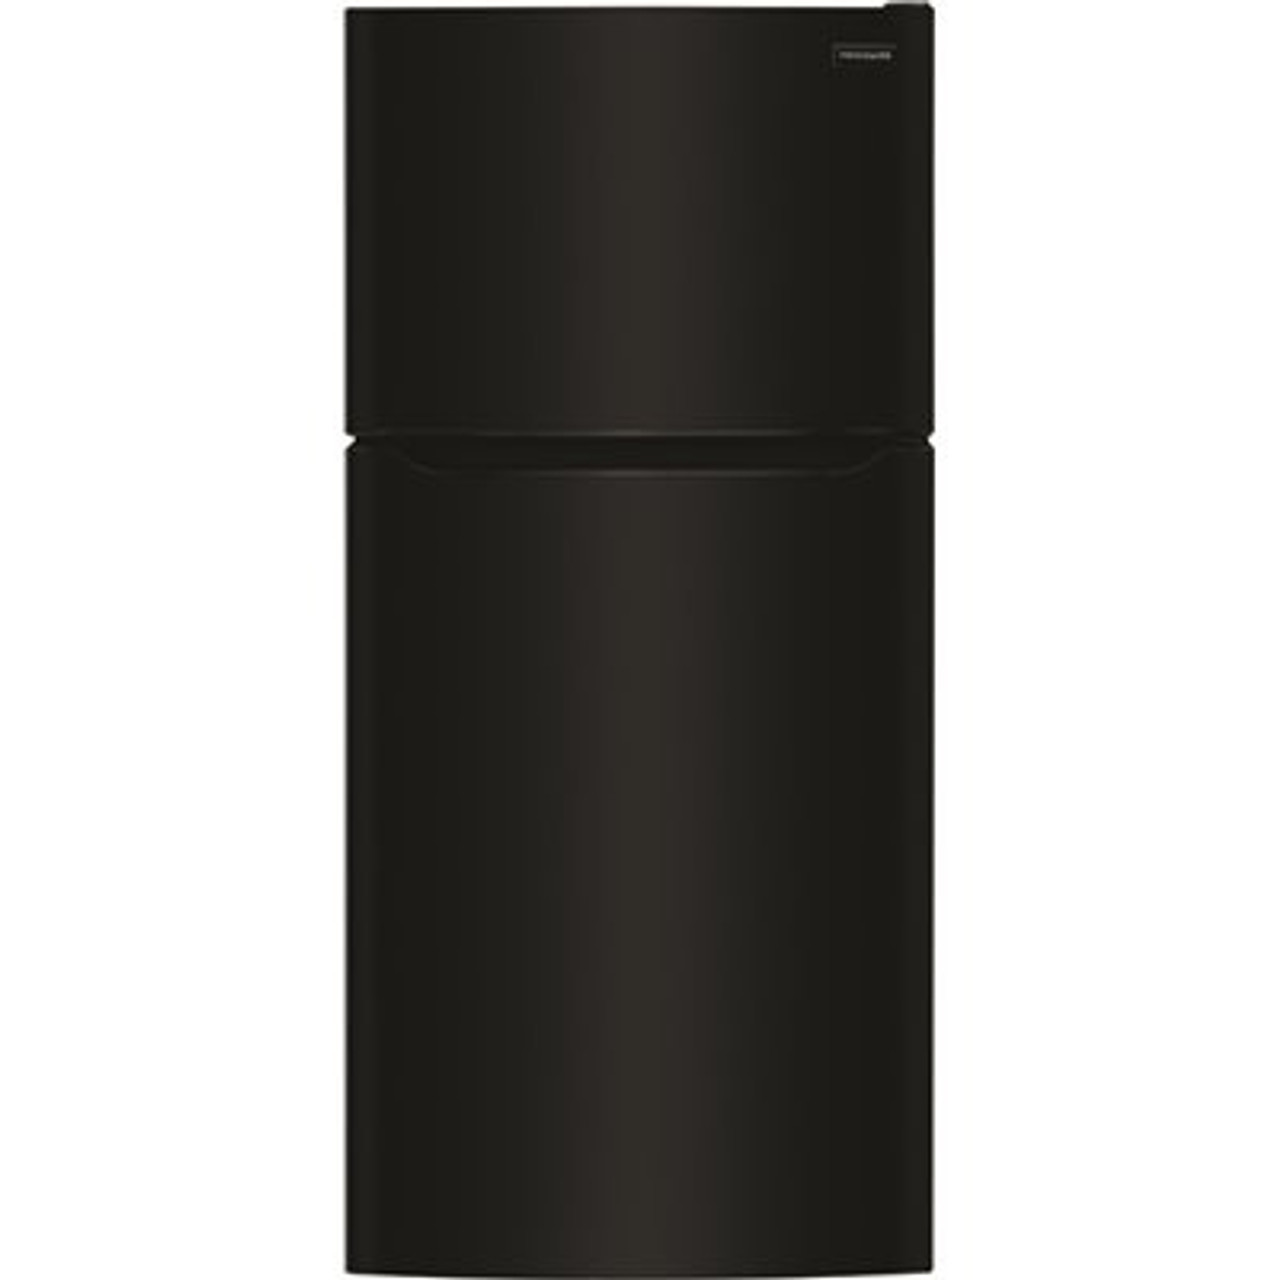 Frigidaire 30 in. 18.3 cu. ft. Top Freezer Refrigerator in Black